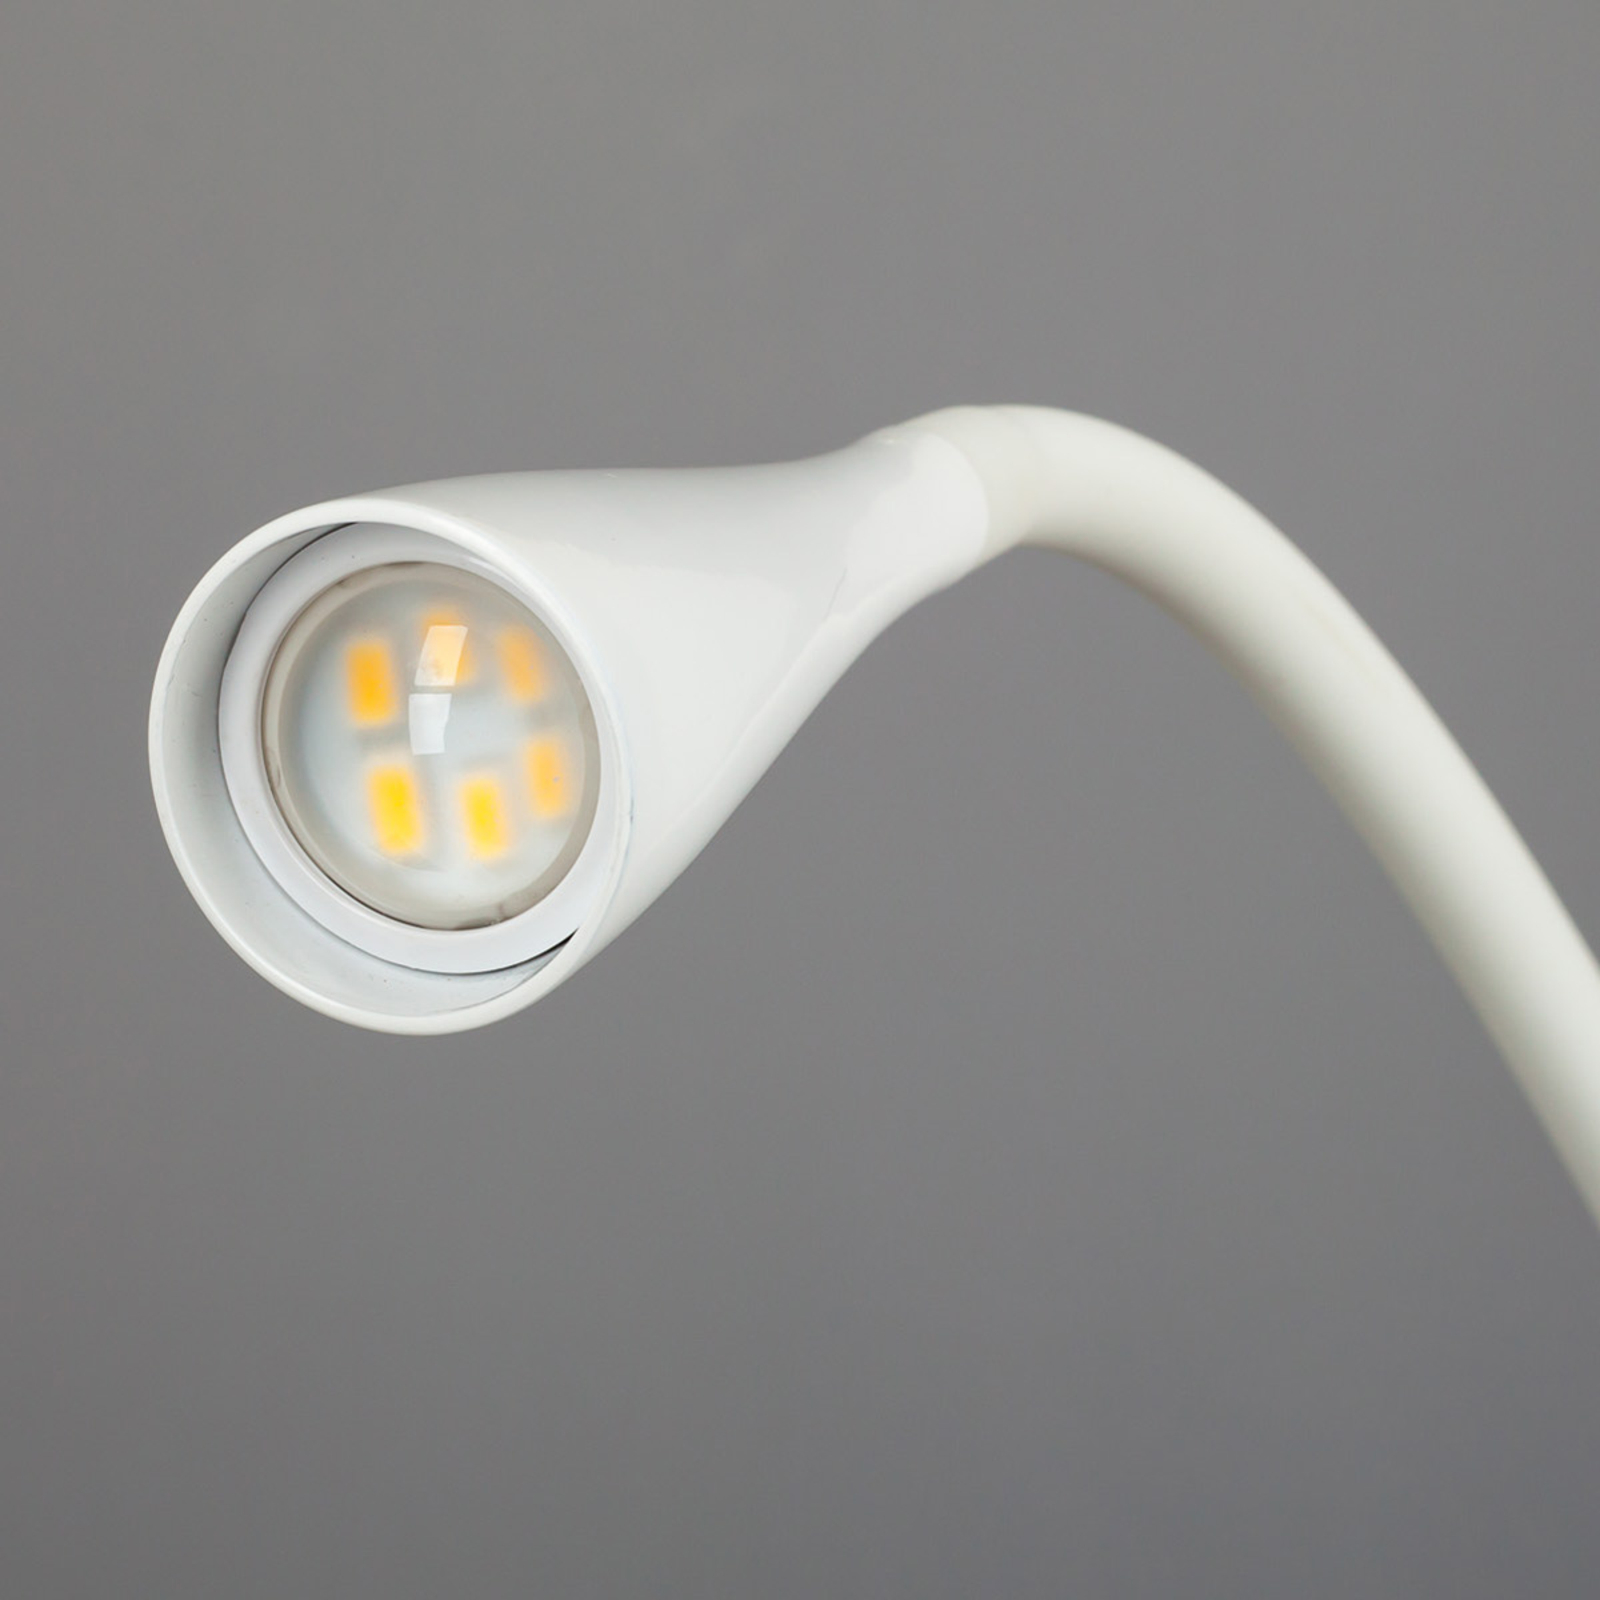 Wąska lampa zaciskowa LED Baris w bieli